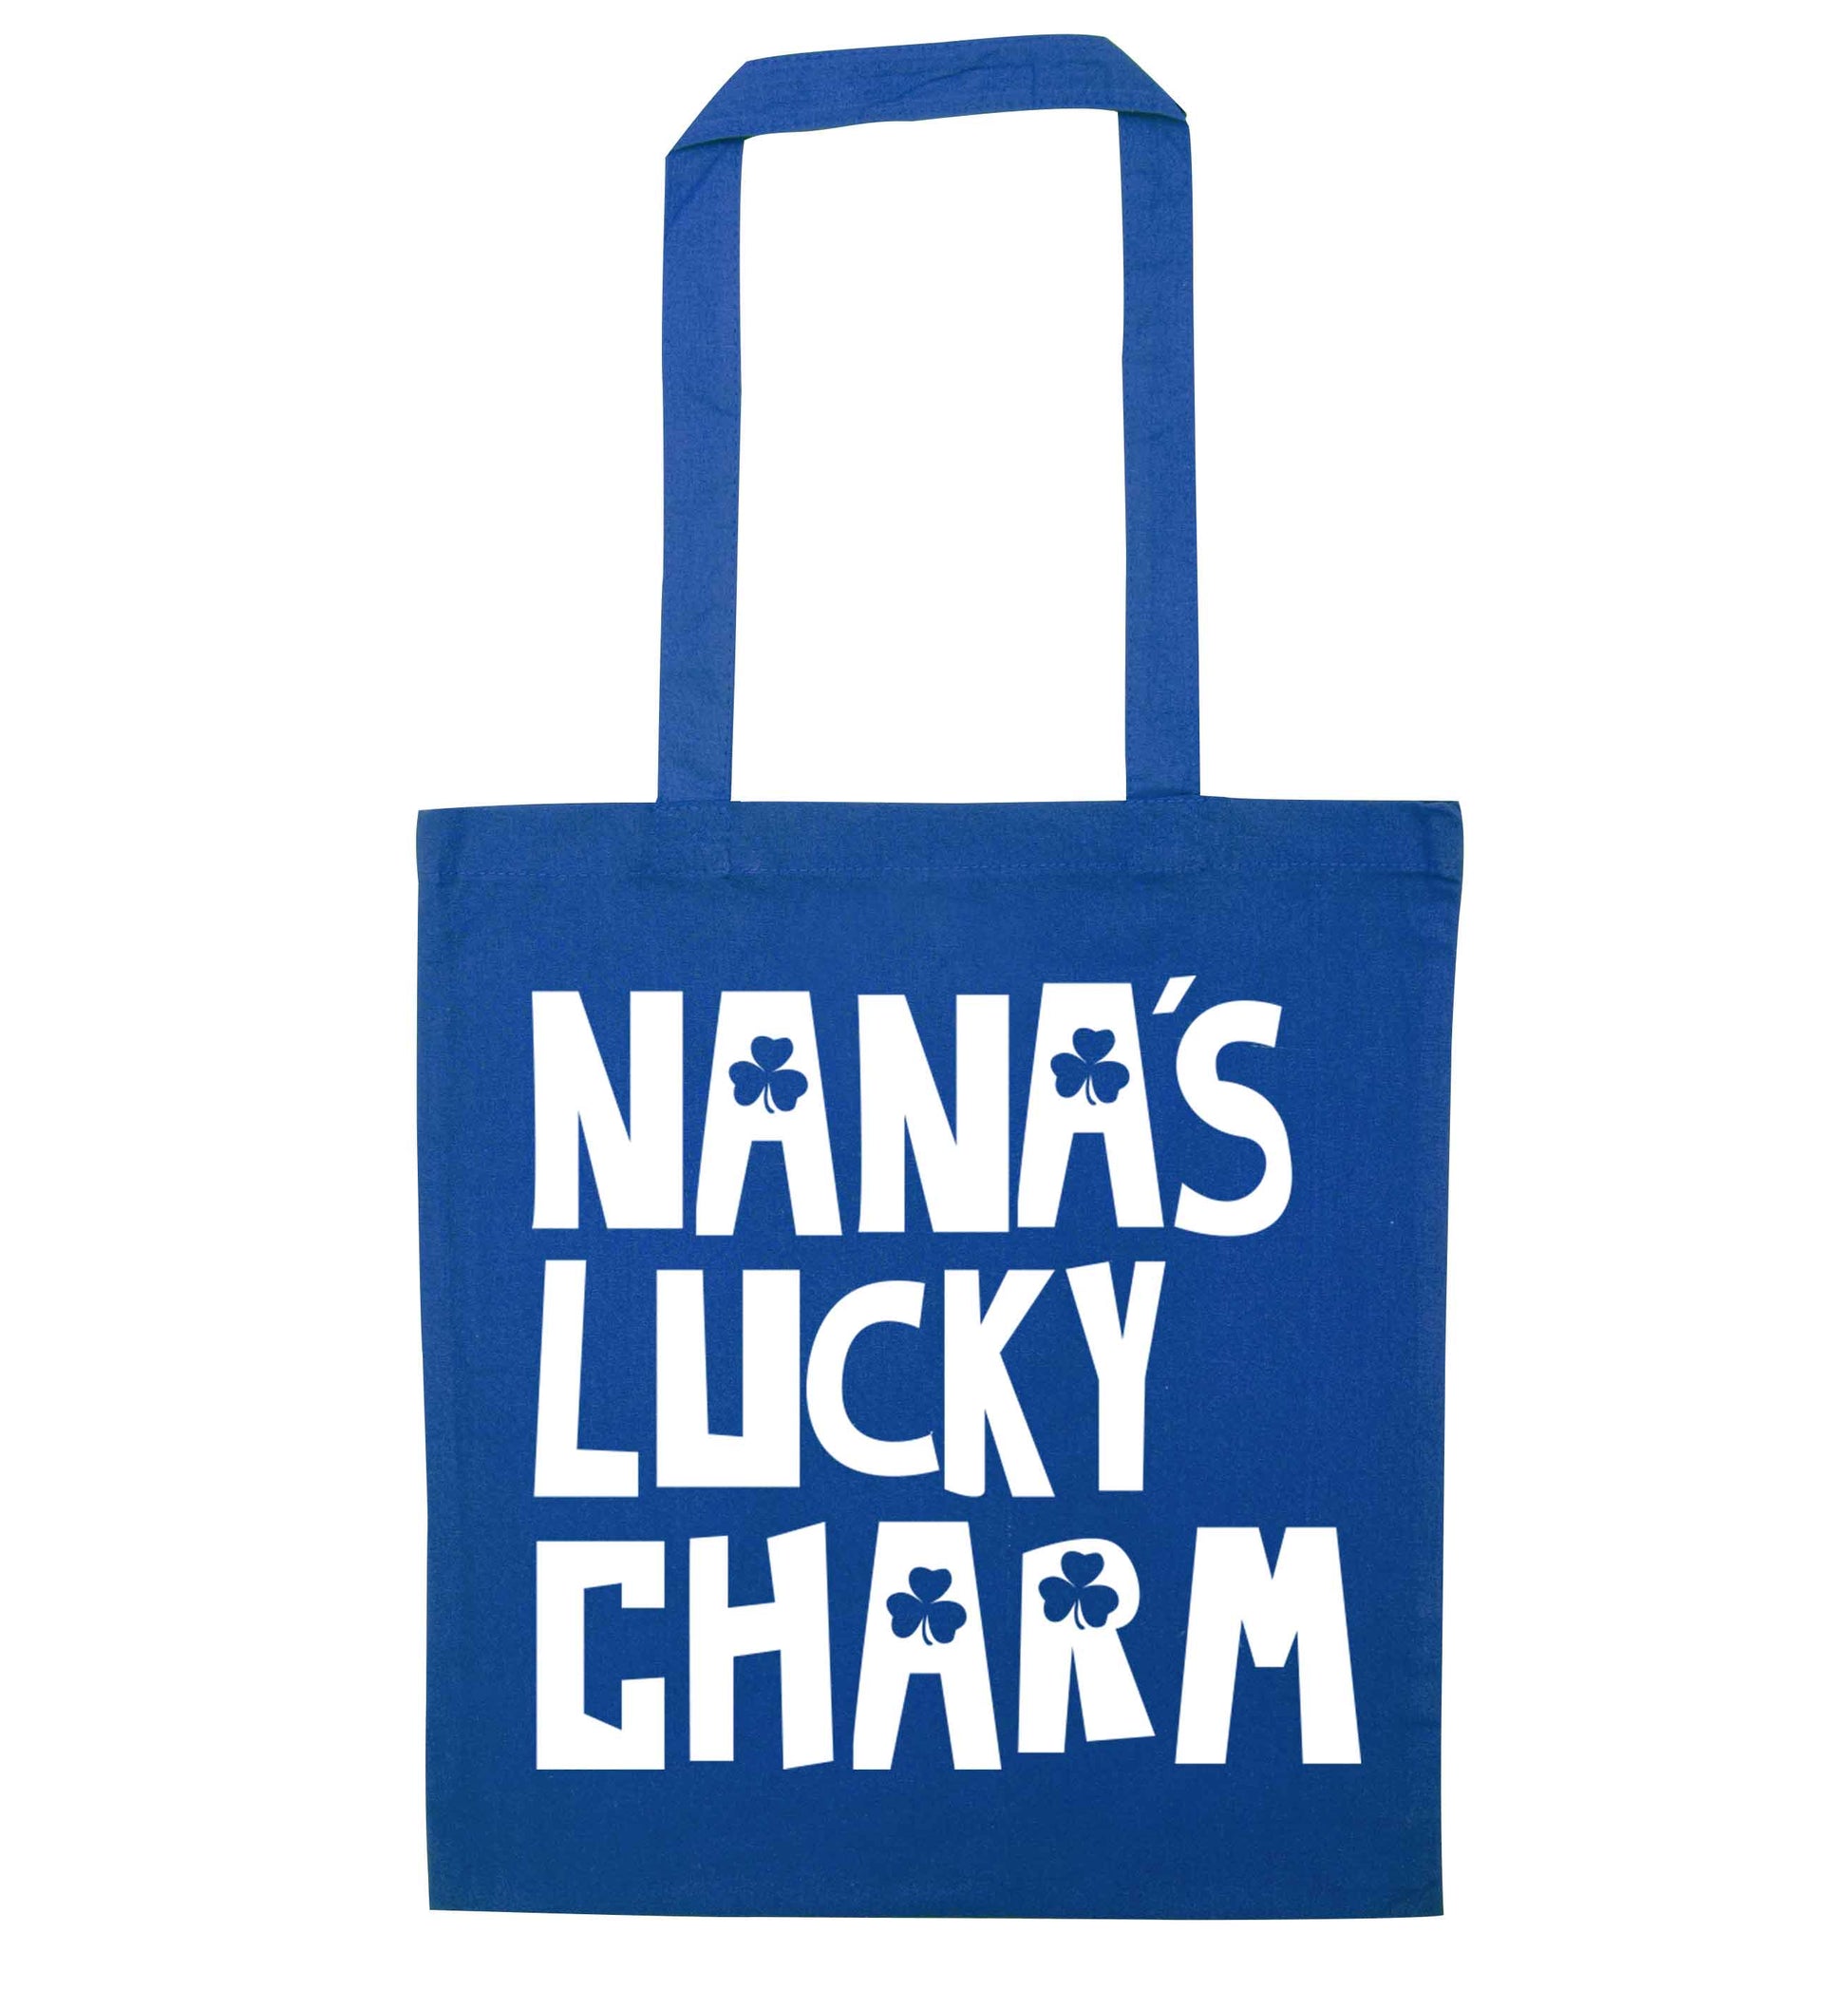 Nana's lucky charm blue tote bag